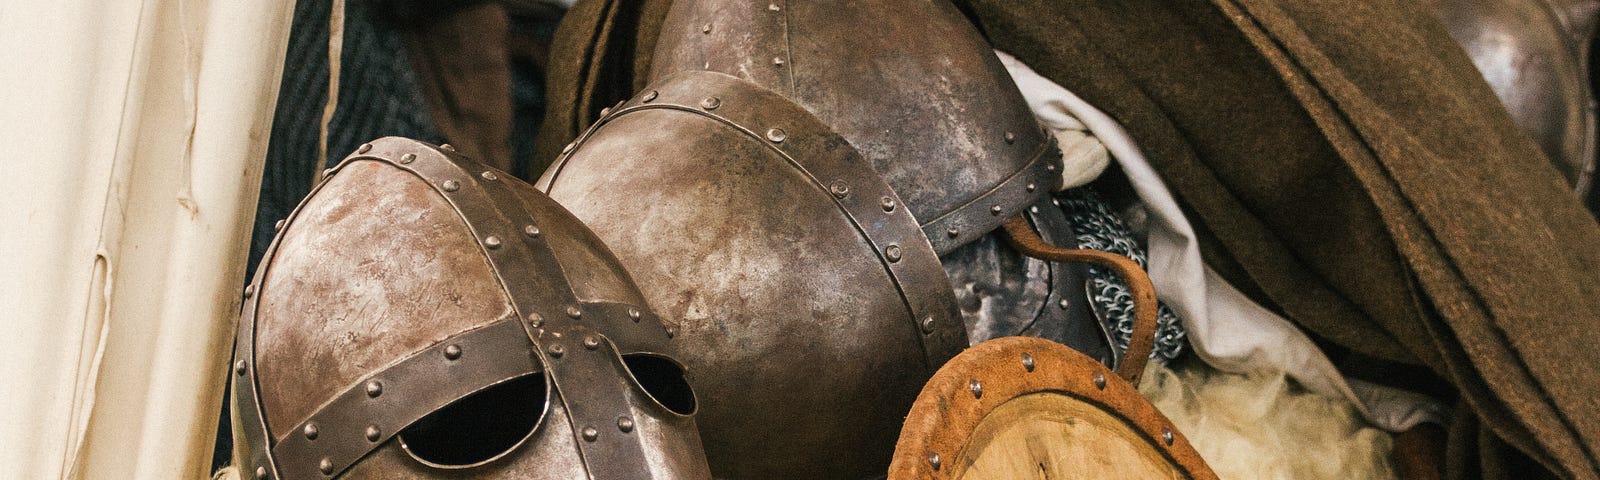 Medeival helmets and shield